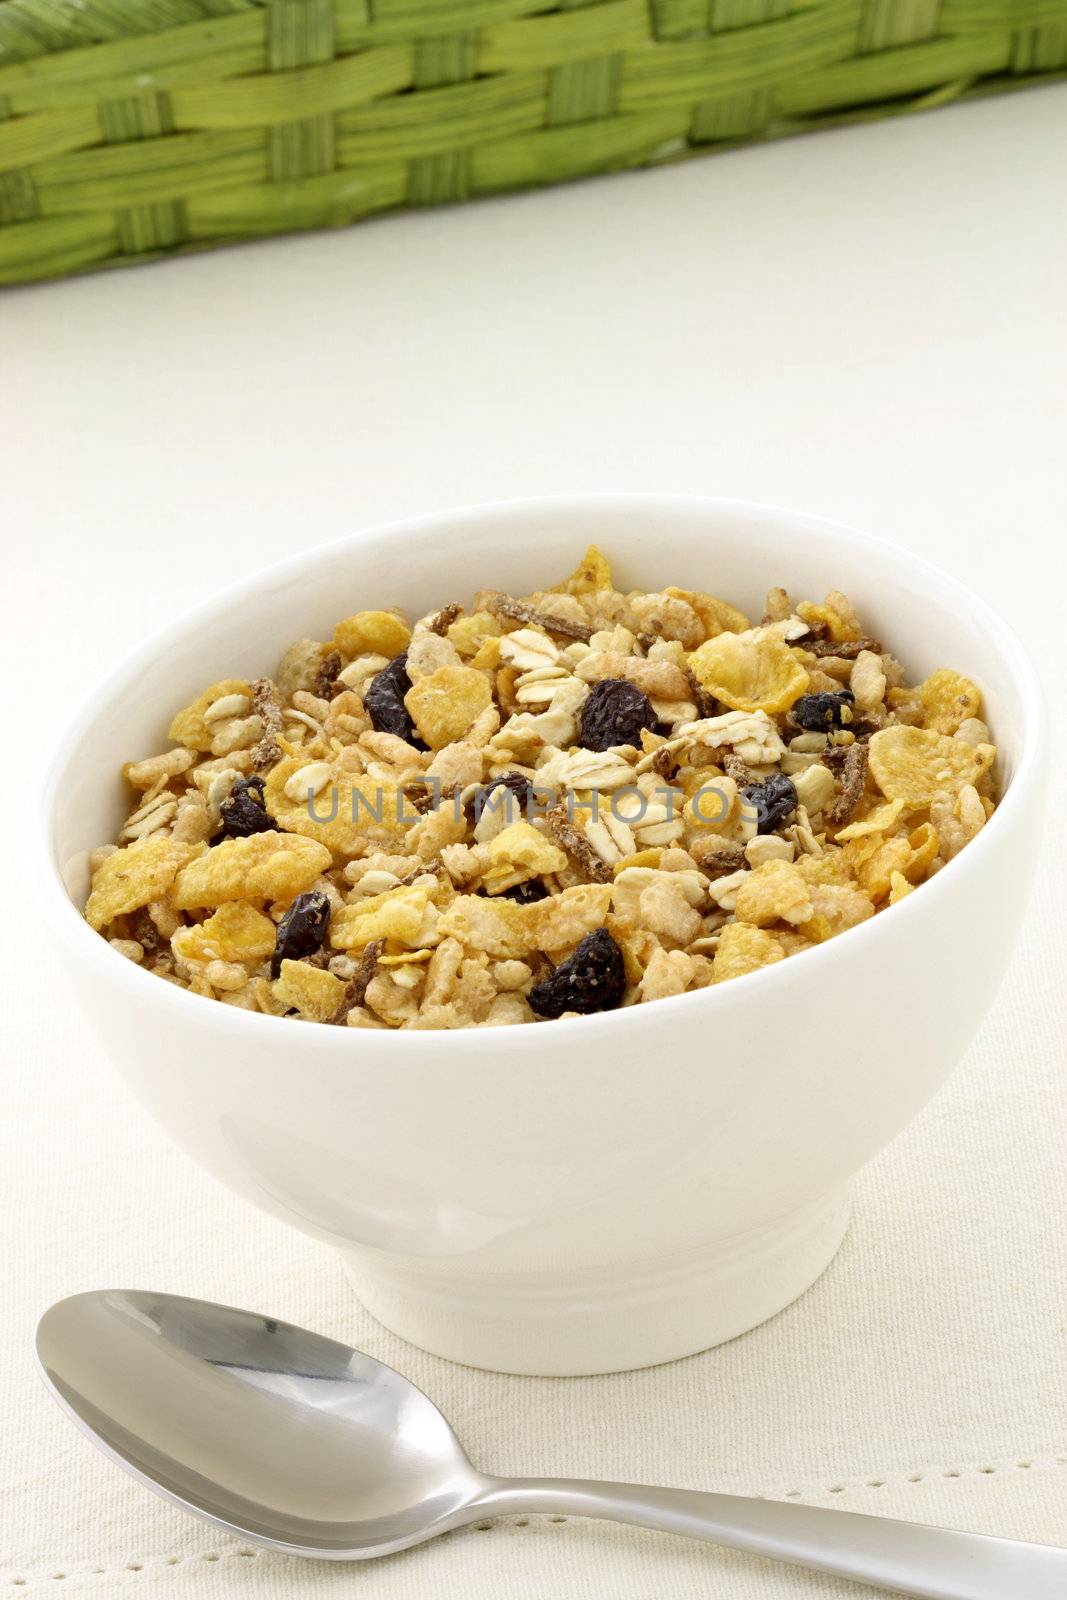 delicious and healthy granola by tacar